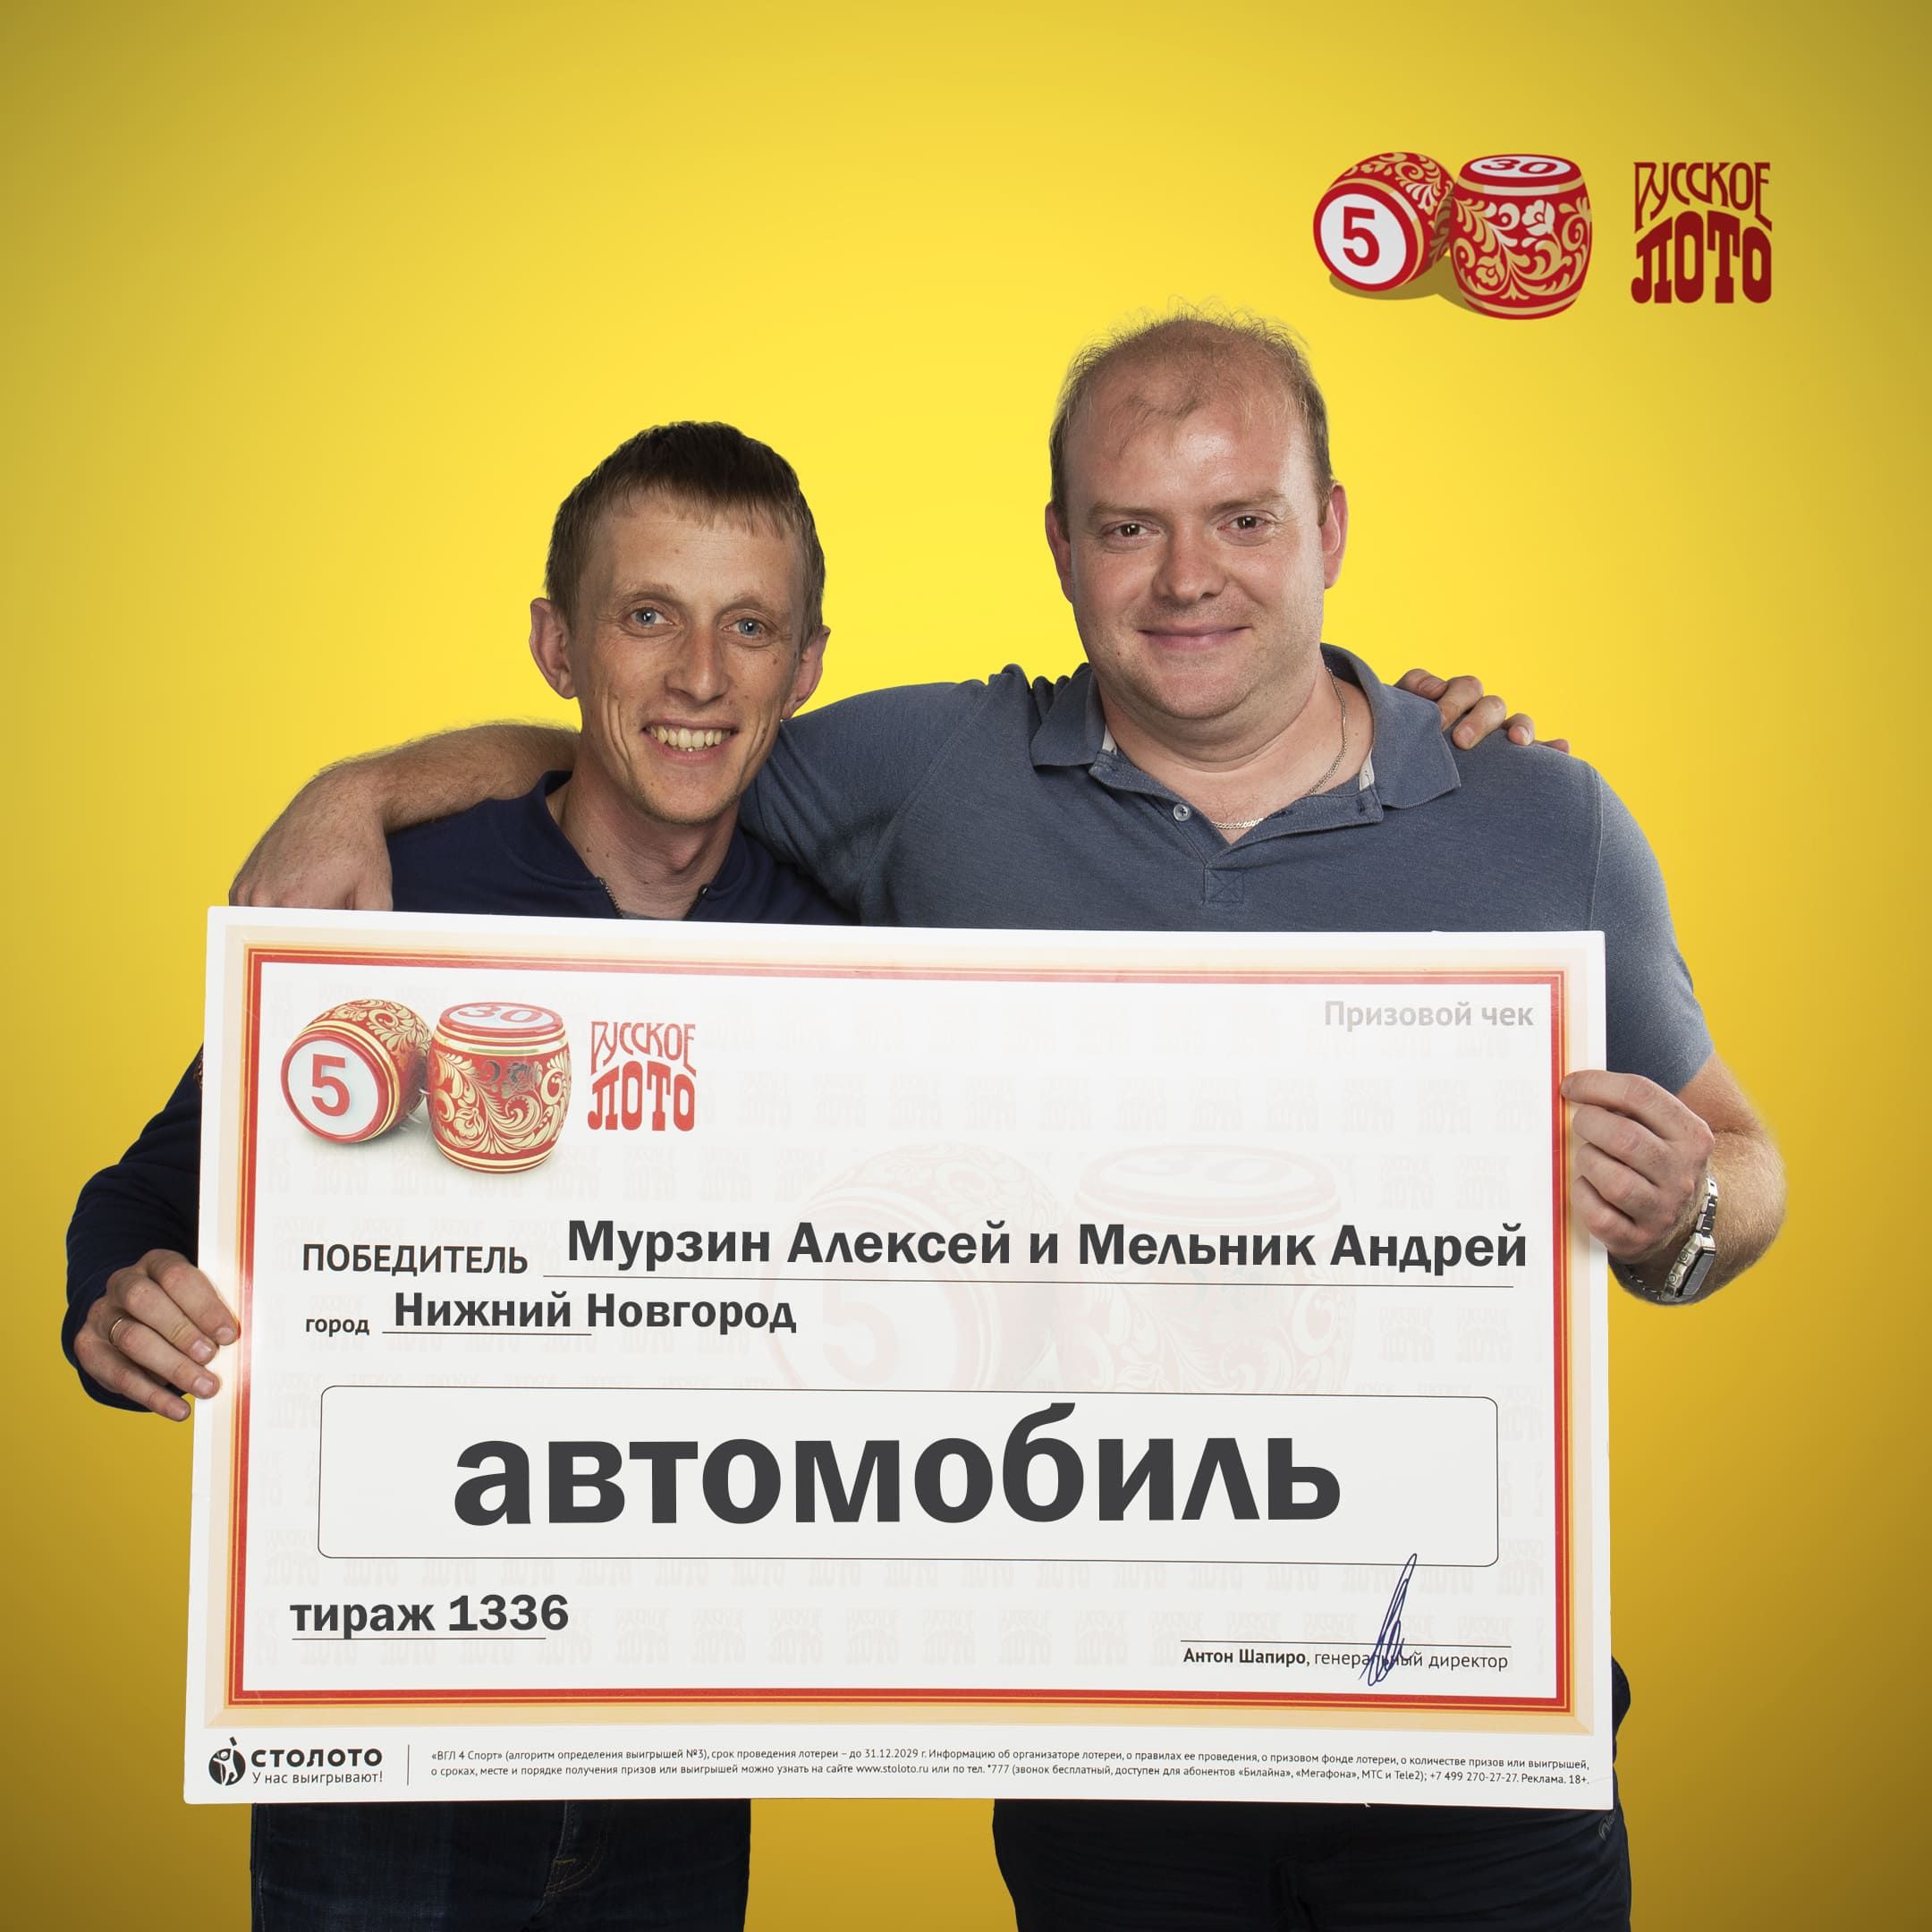 Андрей Мельник и Алексей Мурзин